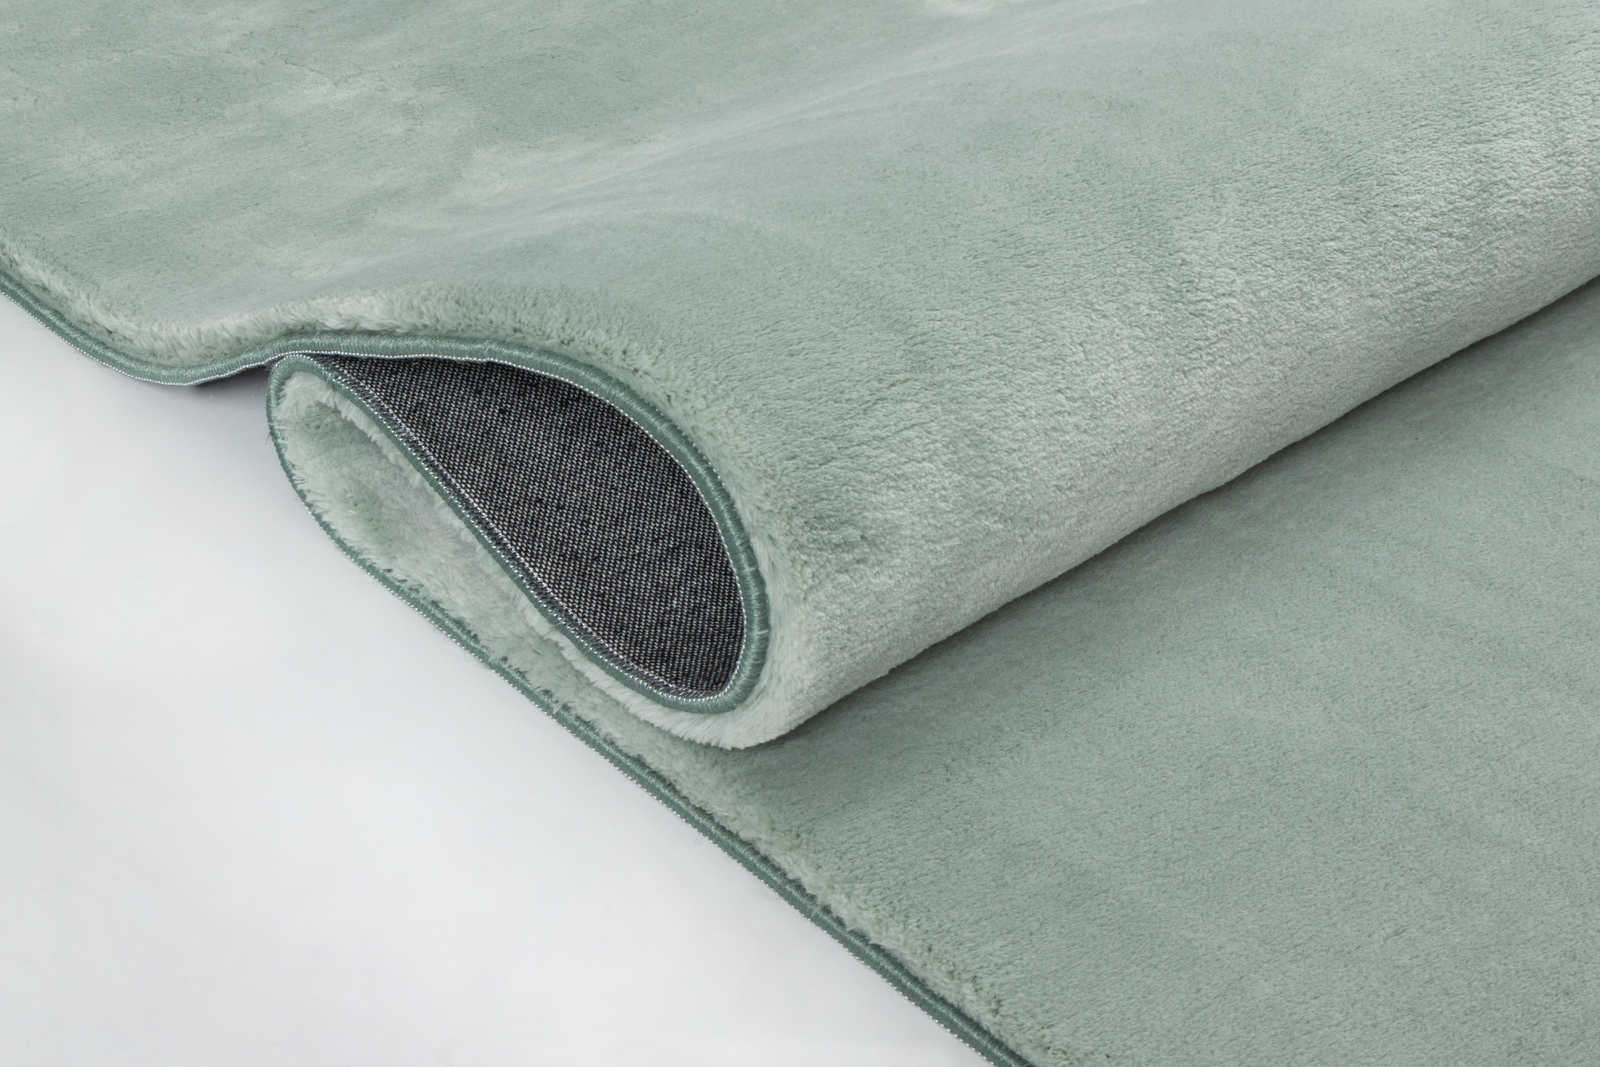             Soft high pile carpet in soft green - 200 x 140 cm
        